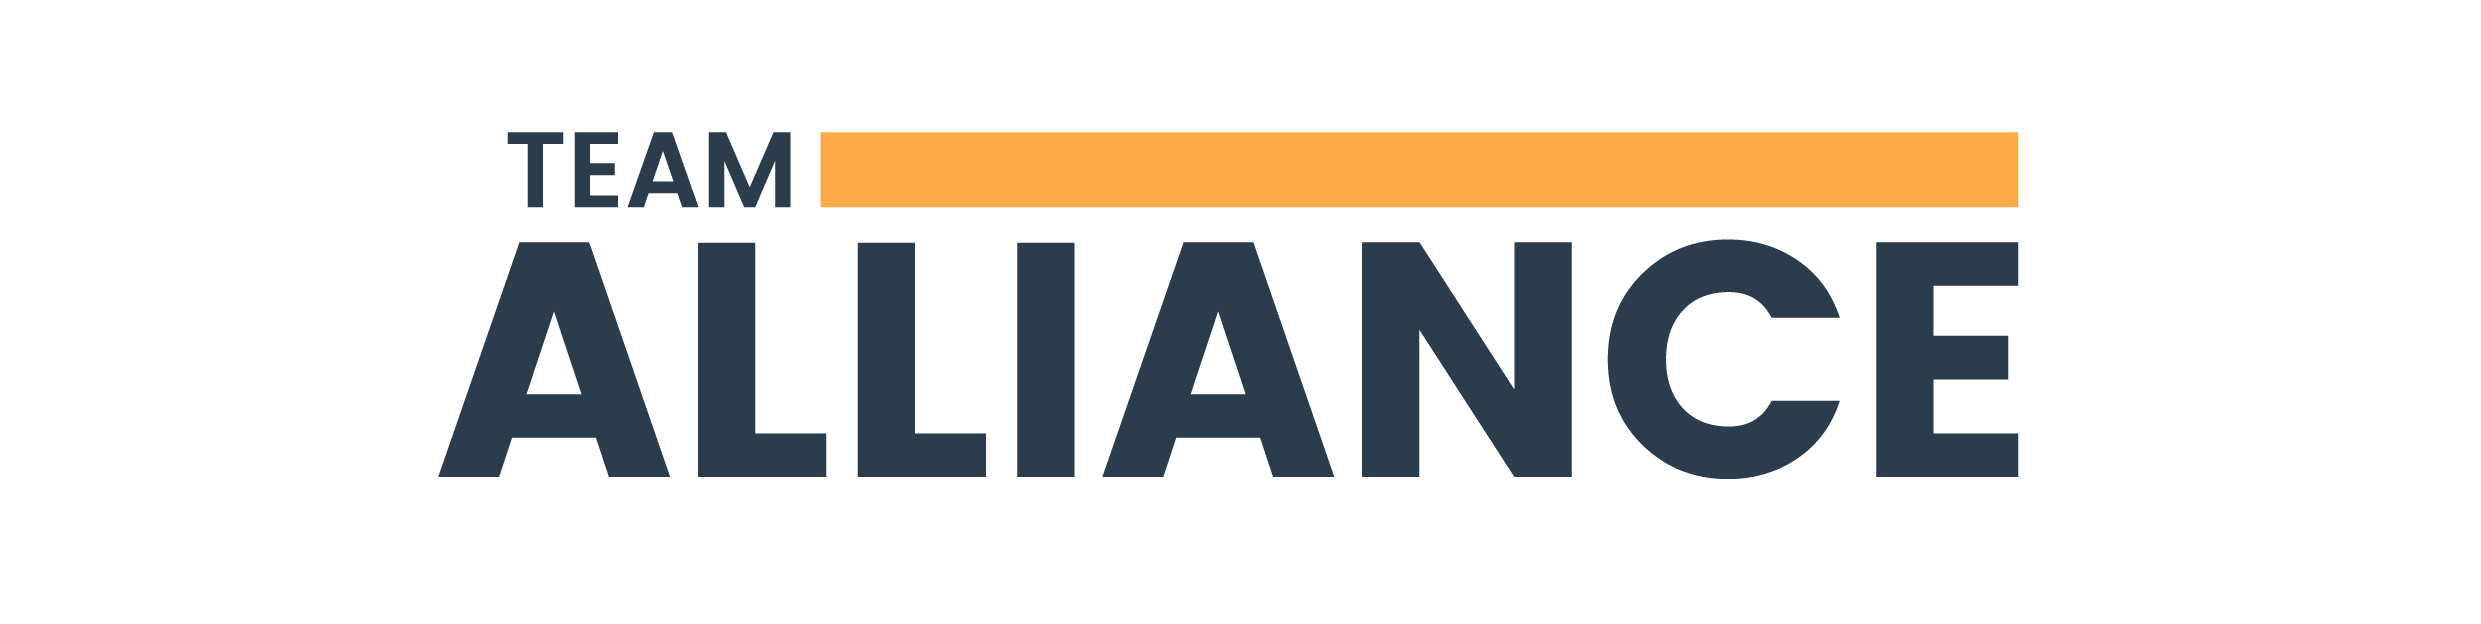 Team Alliance Logo-01